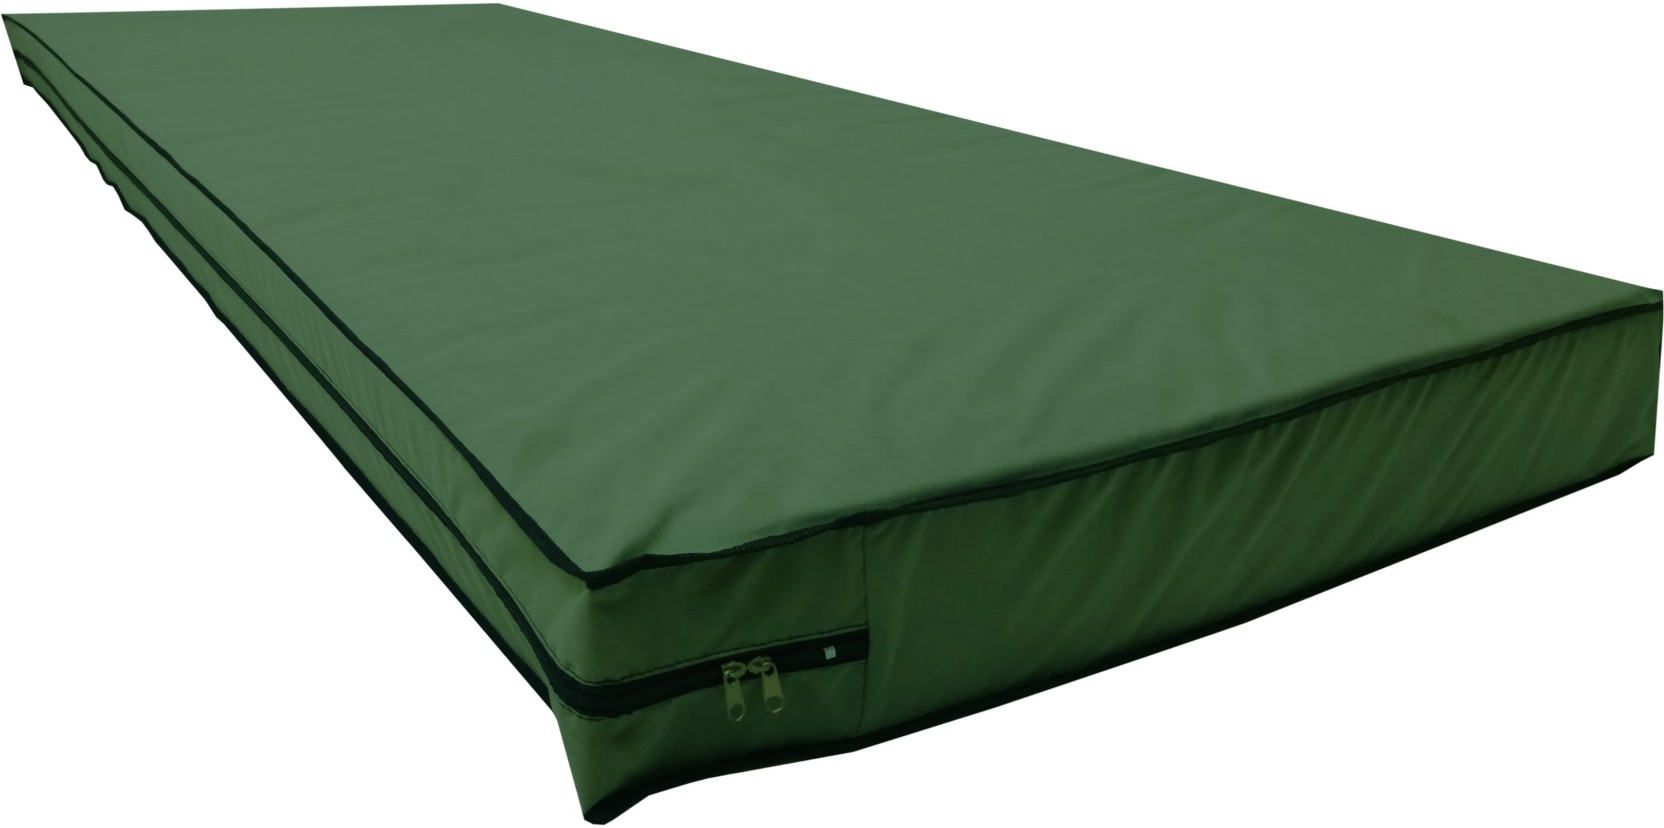 waterproof zippered mattress cover protector